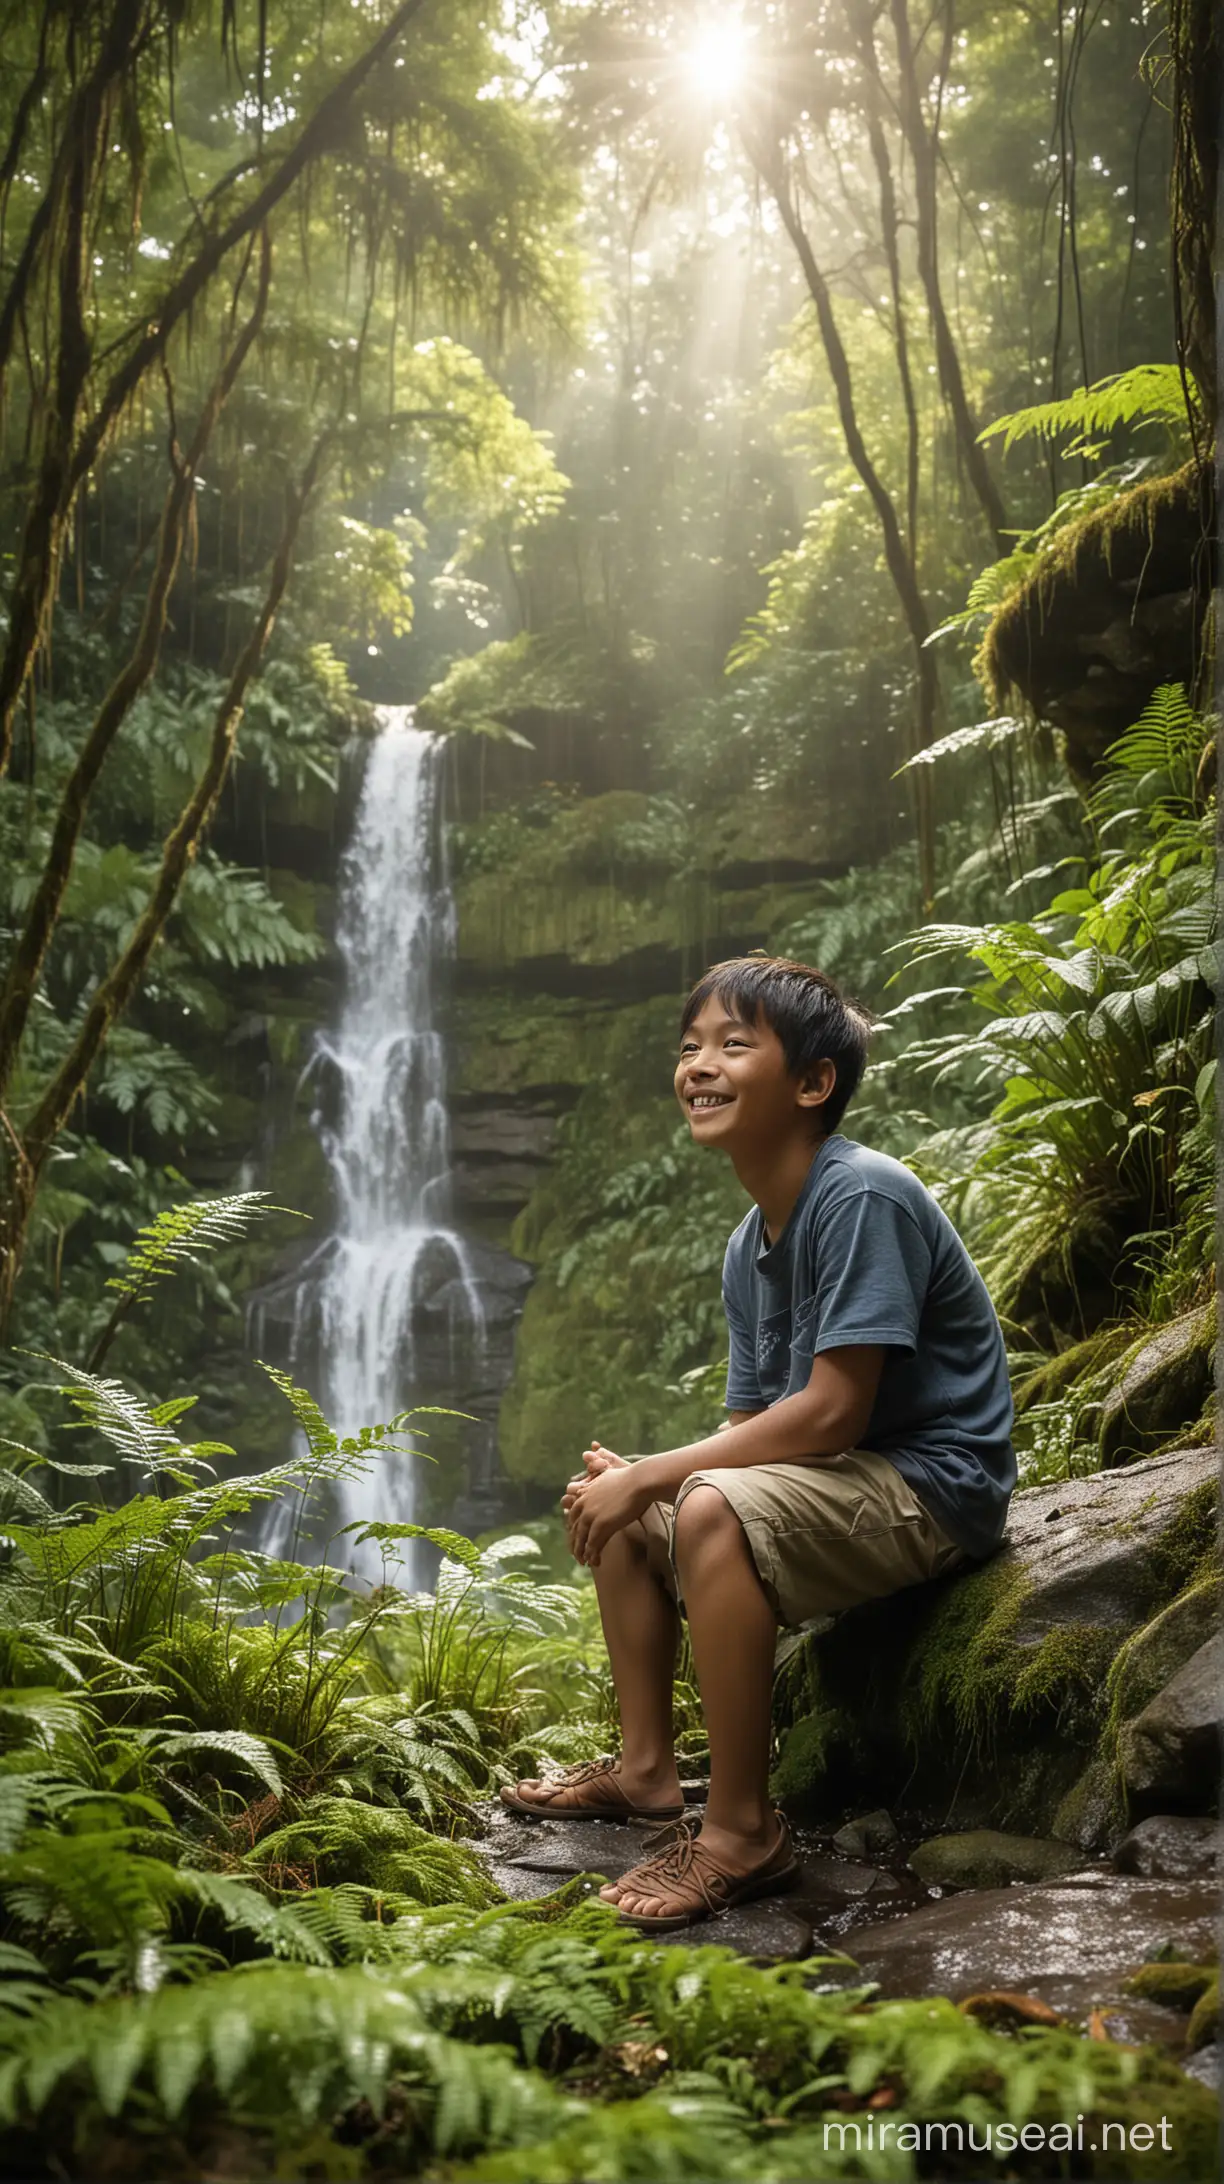 Smiling Indonesian Man and Boy Enjoying Sunlit Forest Oasis